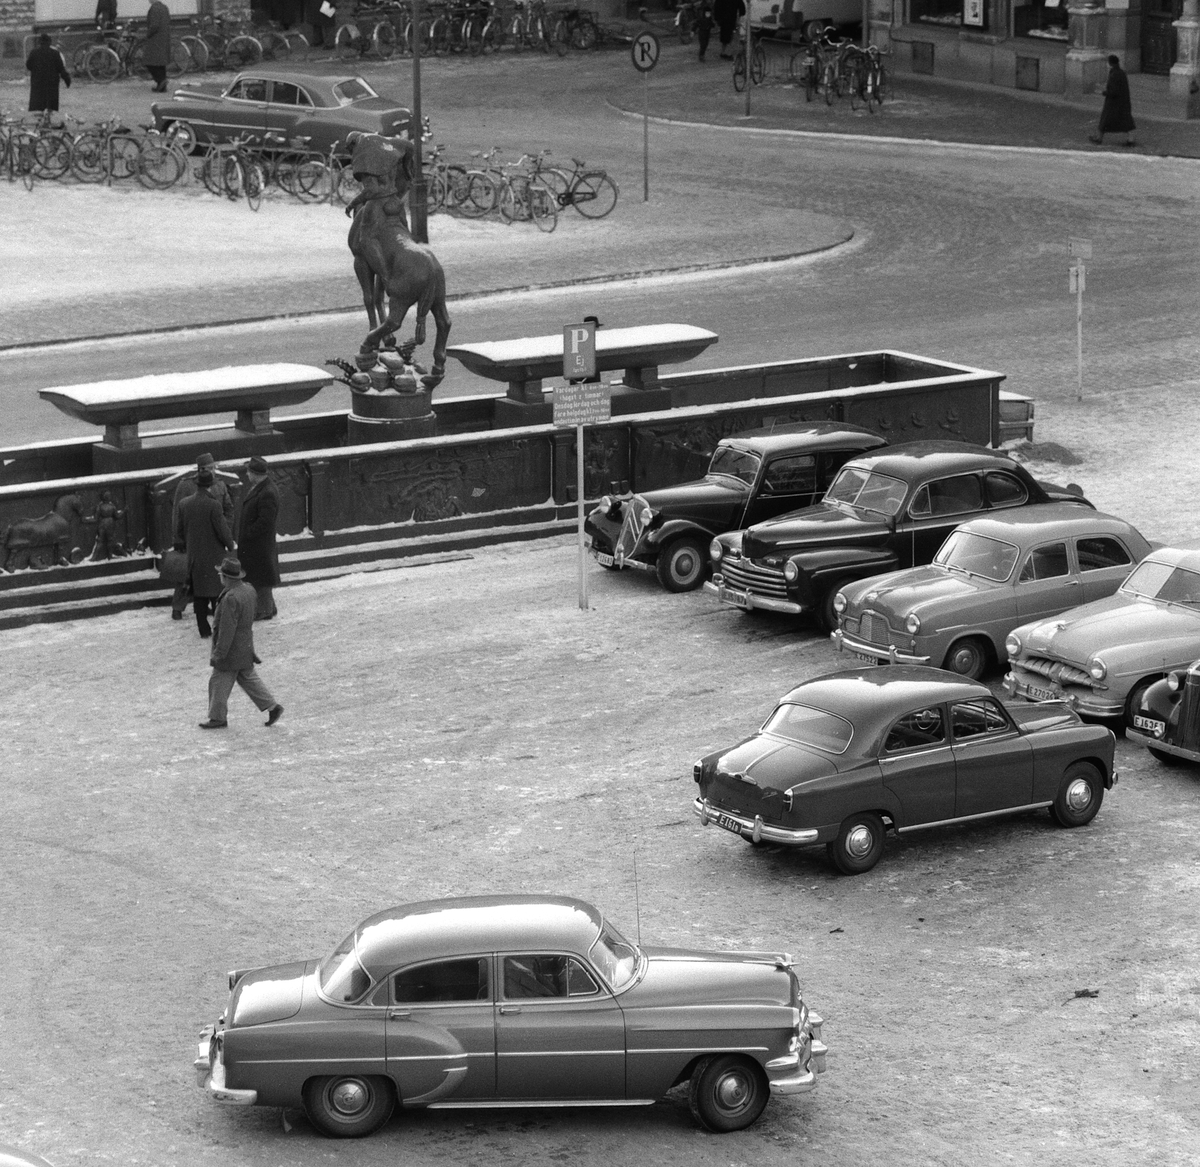 Bilparkering på Stora torget vid Folke Filbyter statyn, 1955.